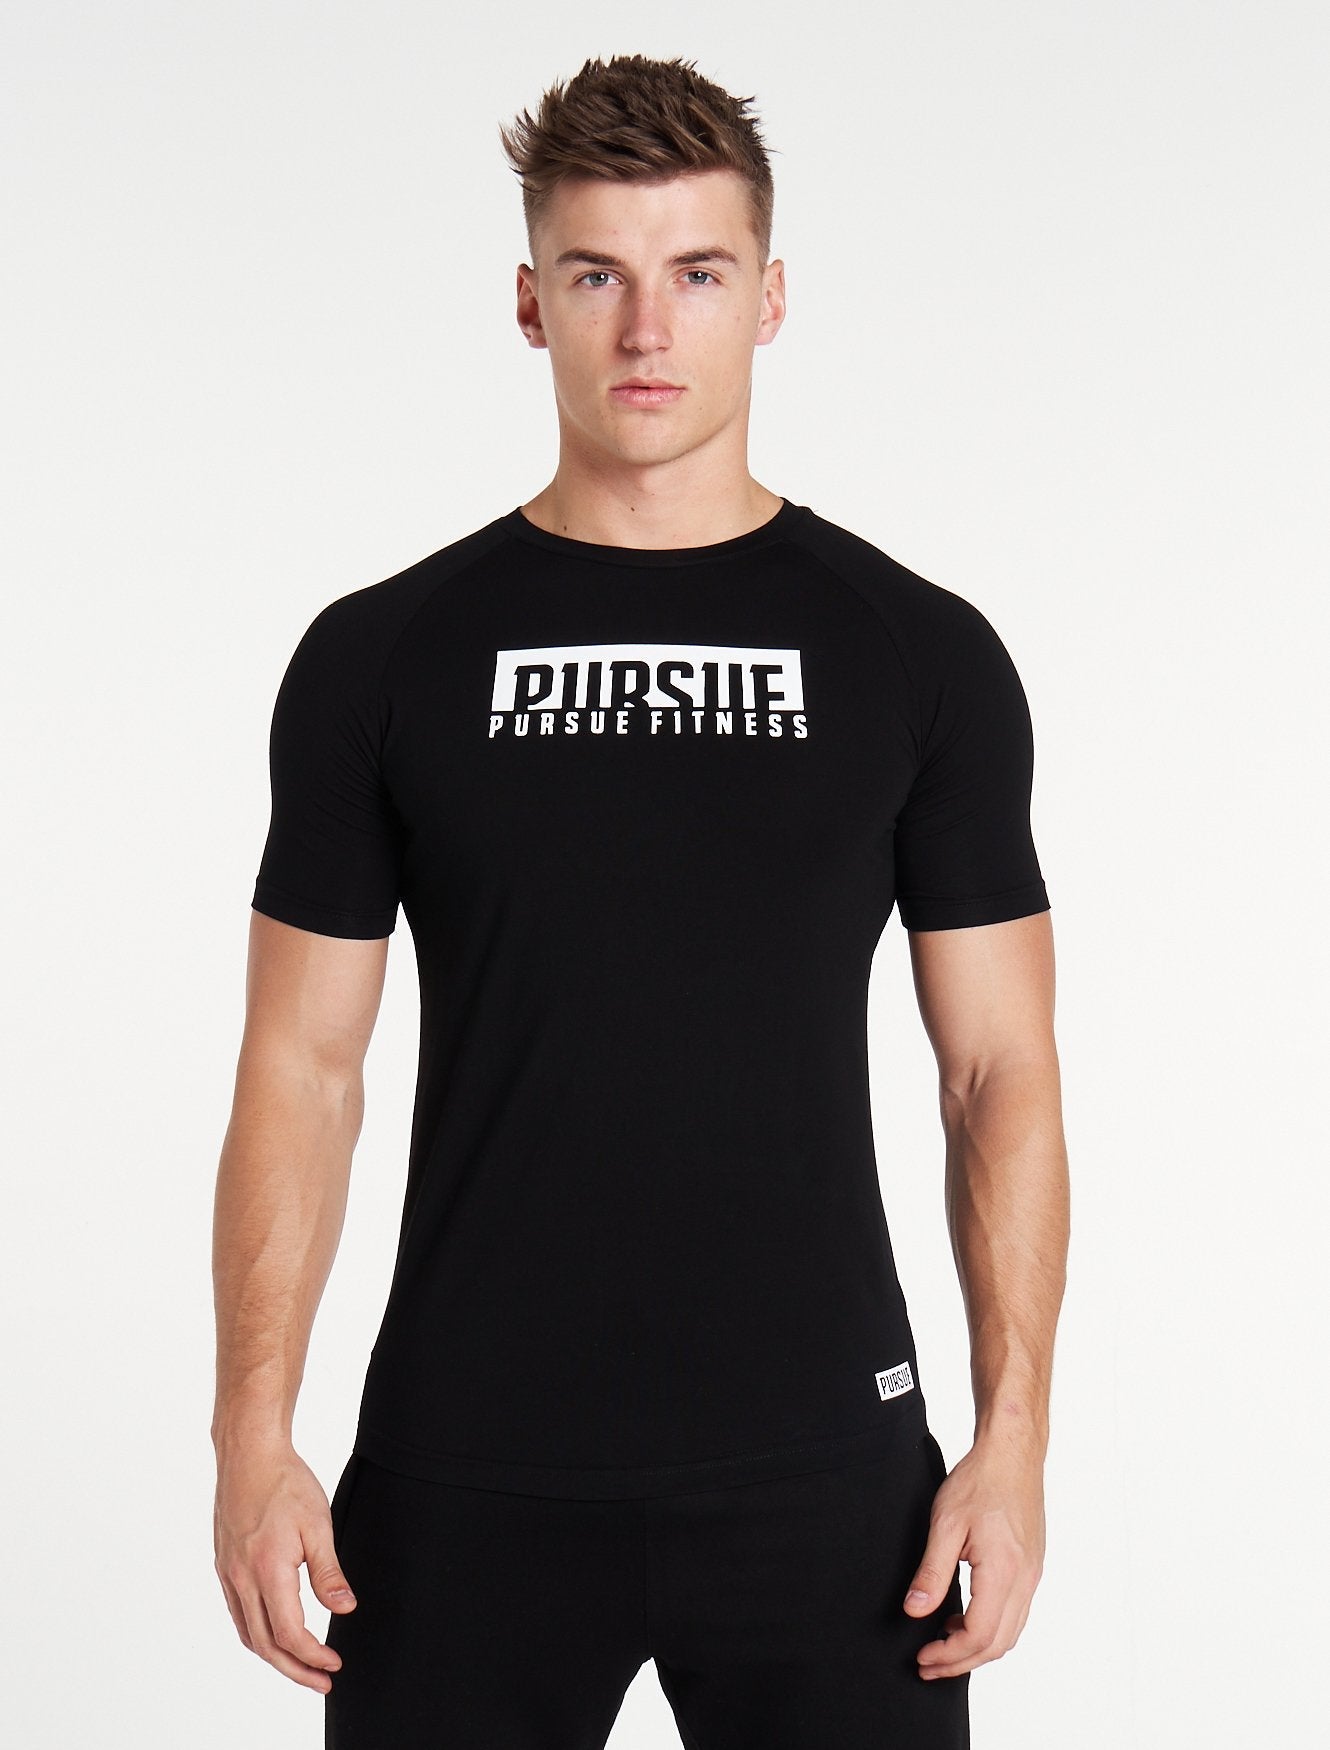 Team T-Shirt / Black Pursue Fitness 1